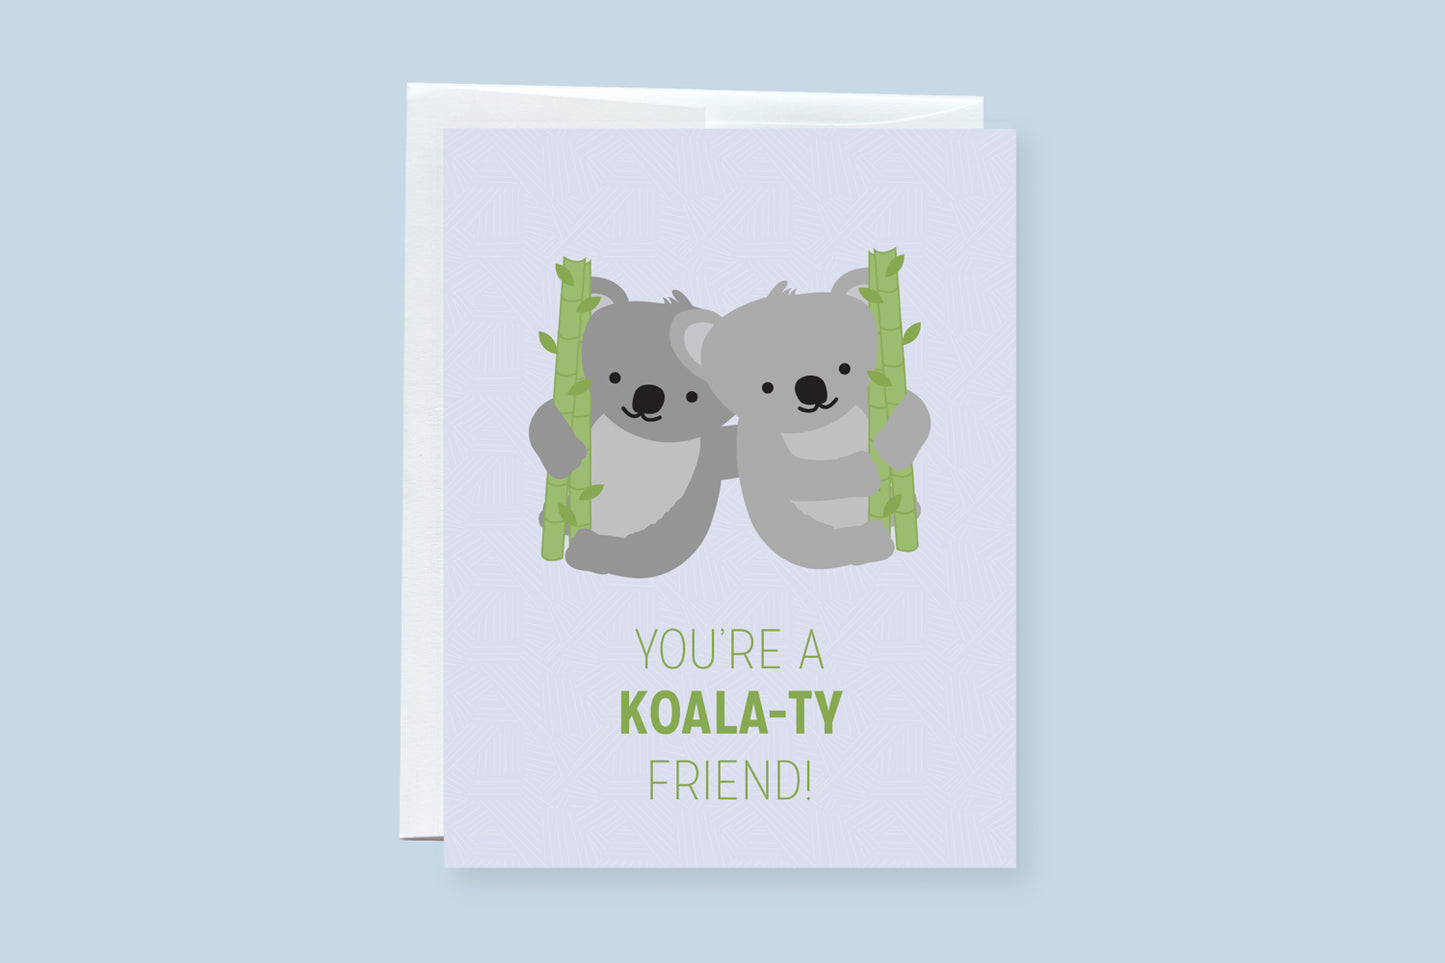 You're a Koala (ty) Friend! Punny Greeting Card